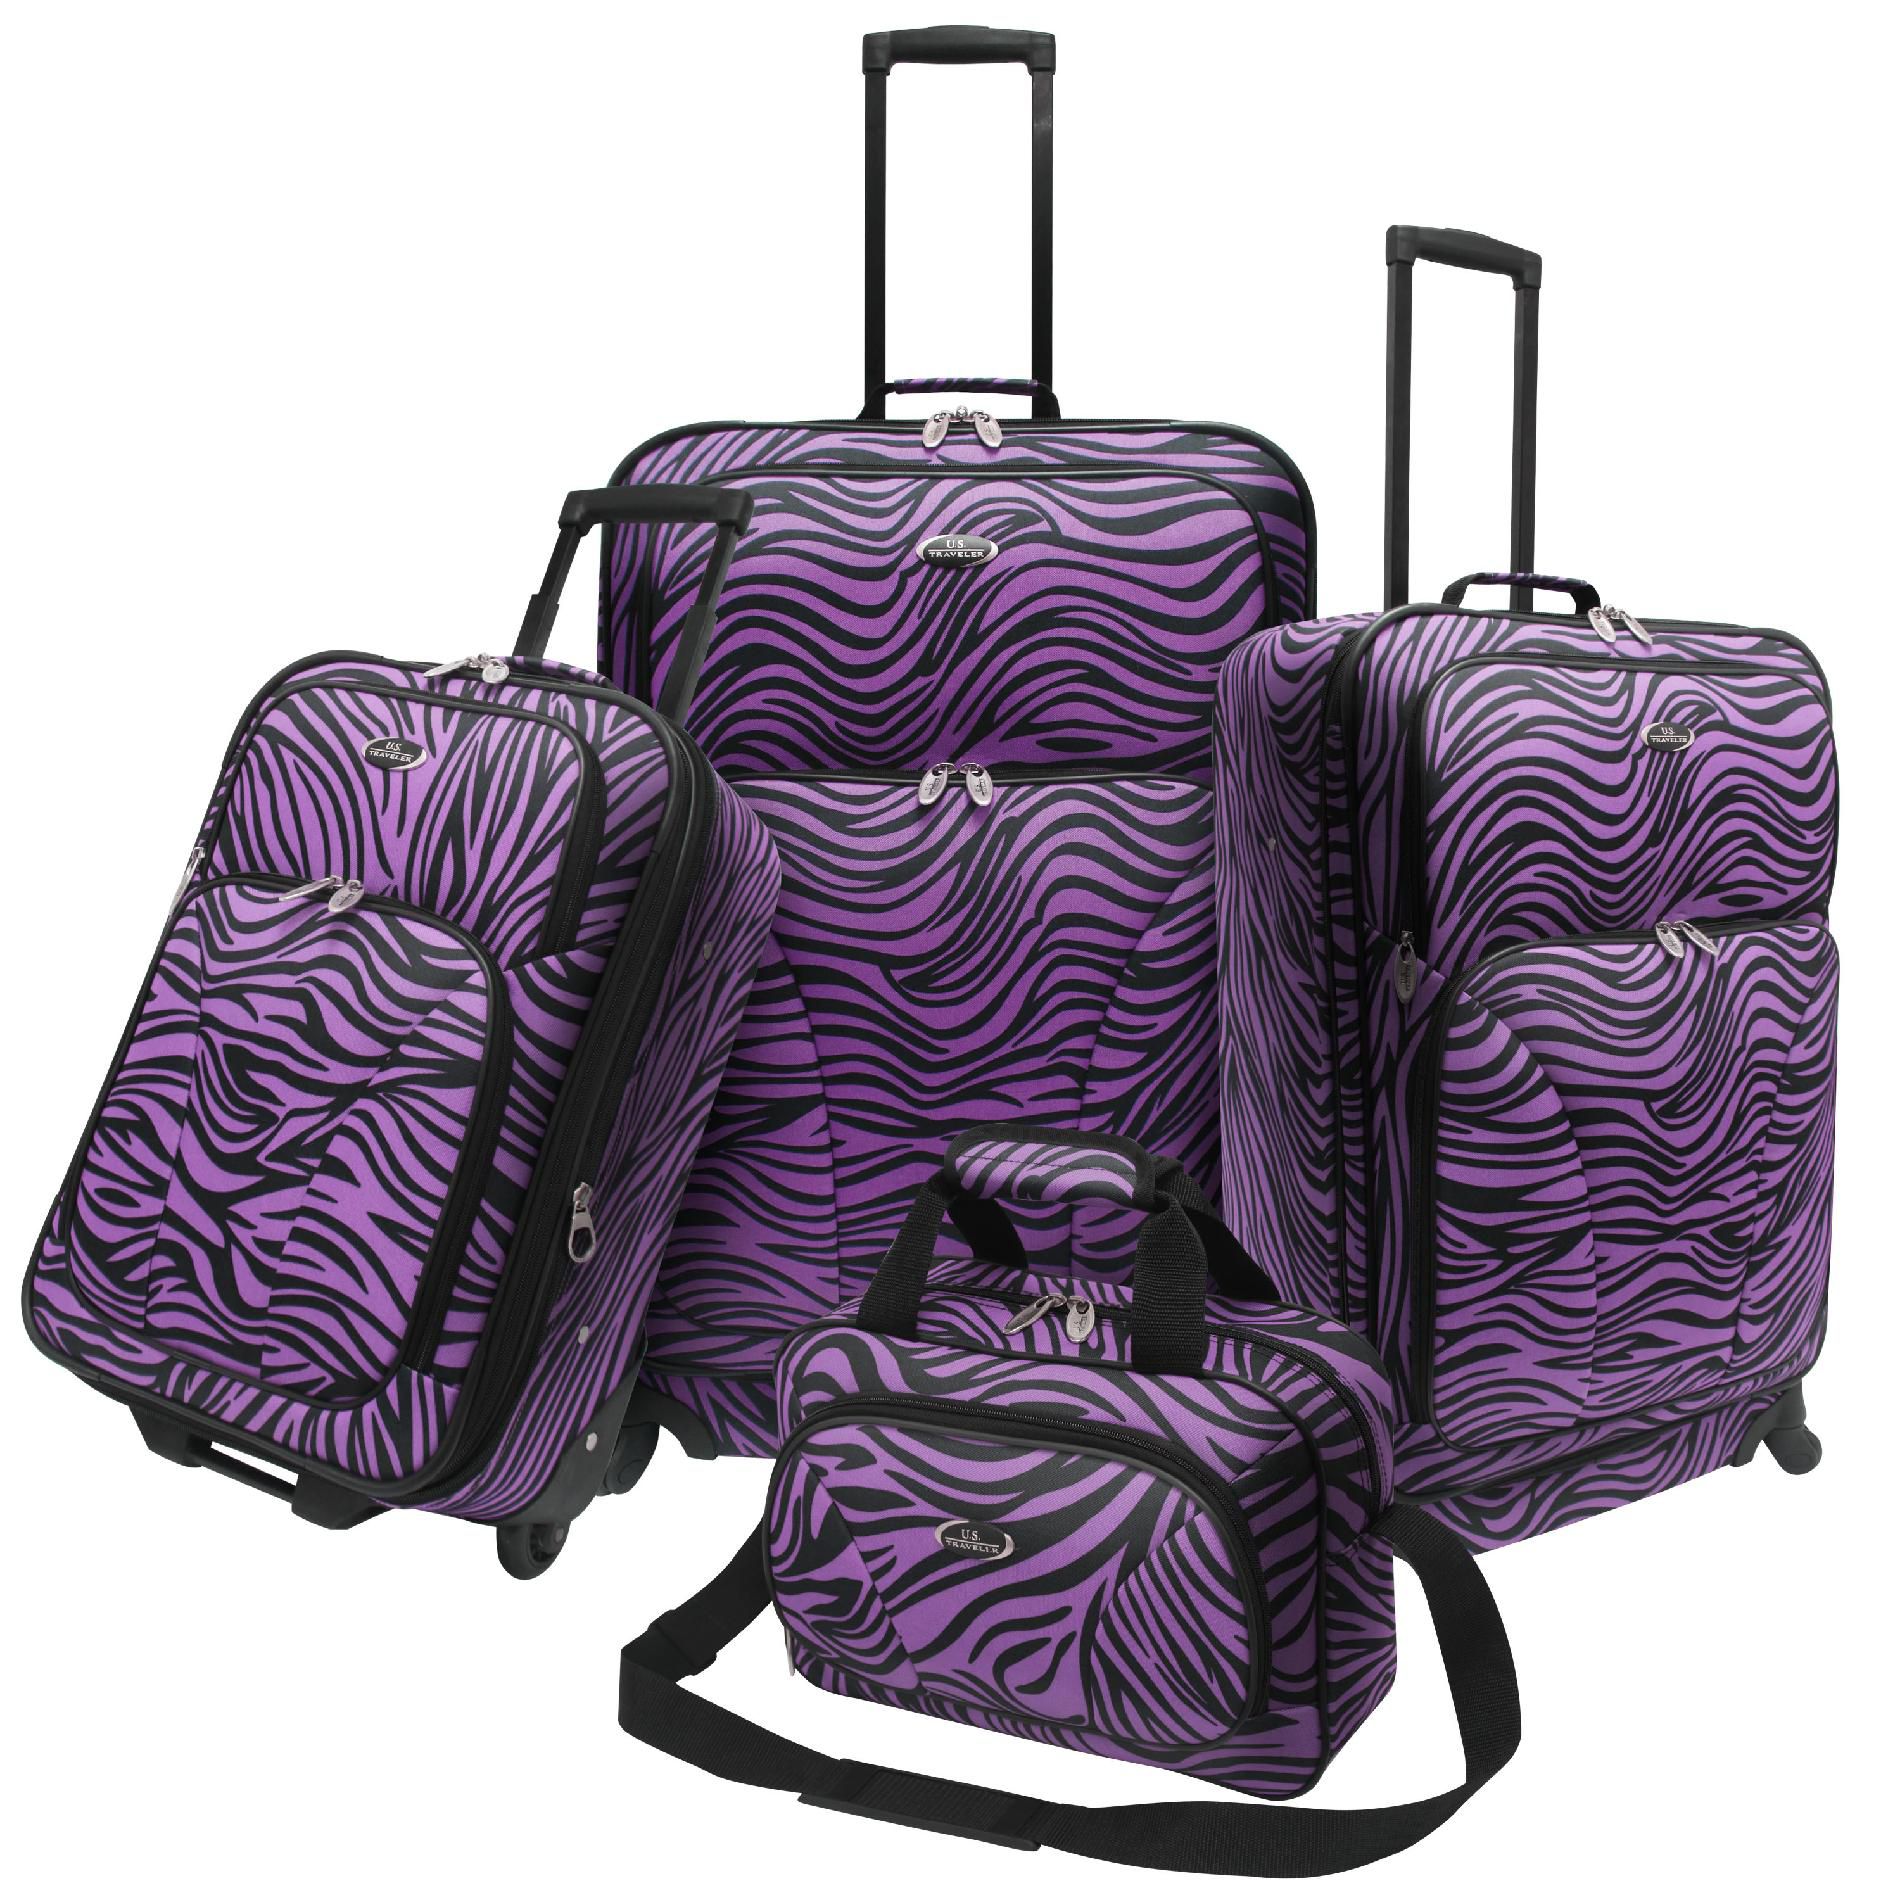 U.S. Traveler Fashion 4 piece Spinner Luggage Set Purple Zebra Print